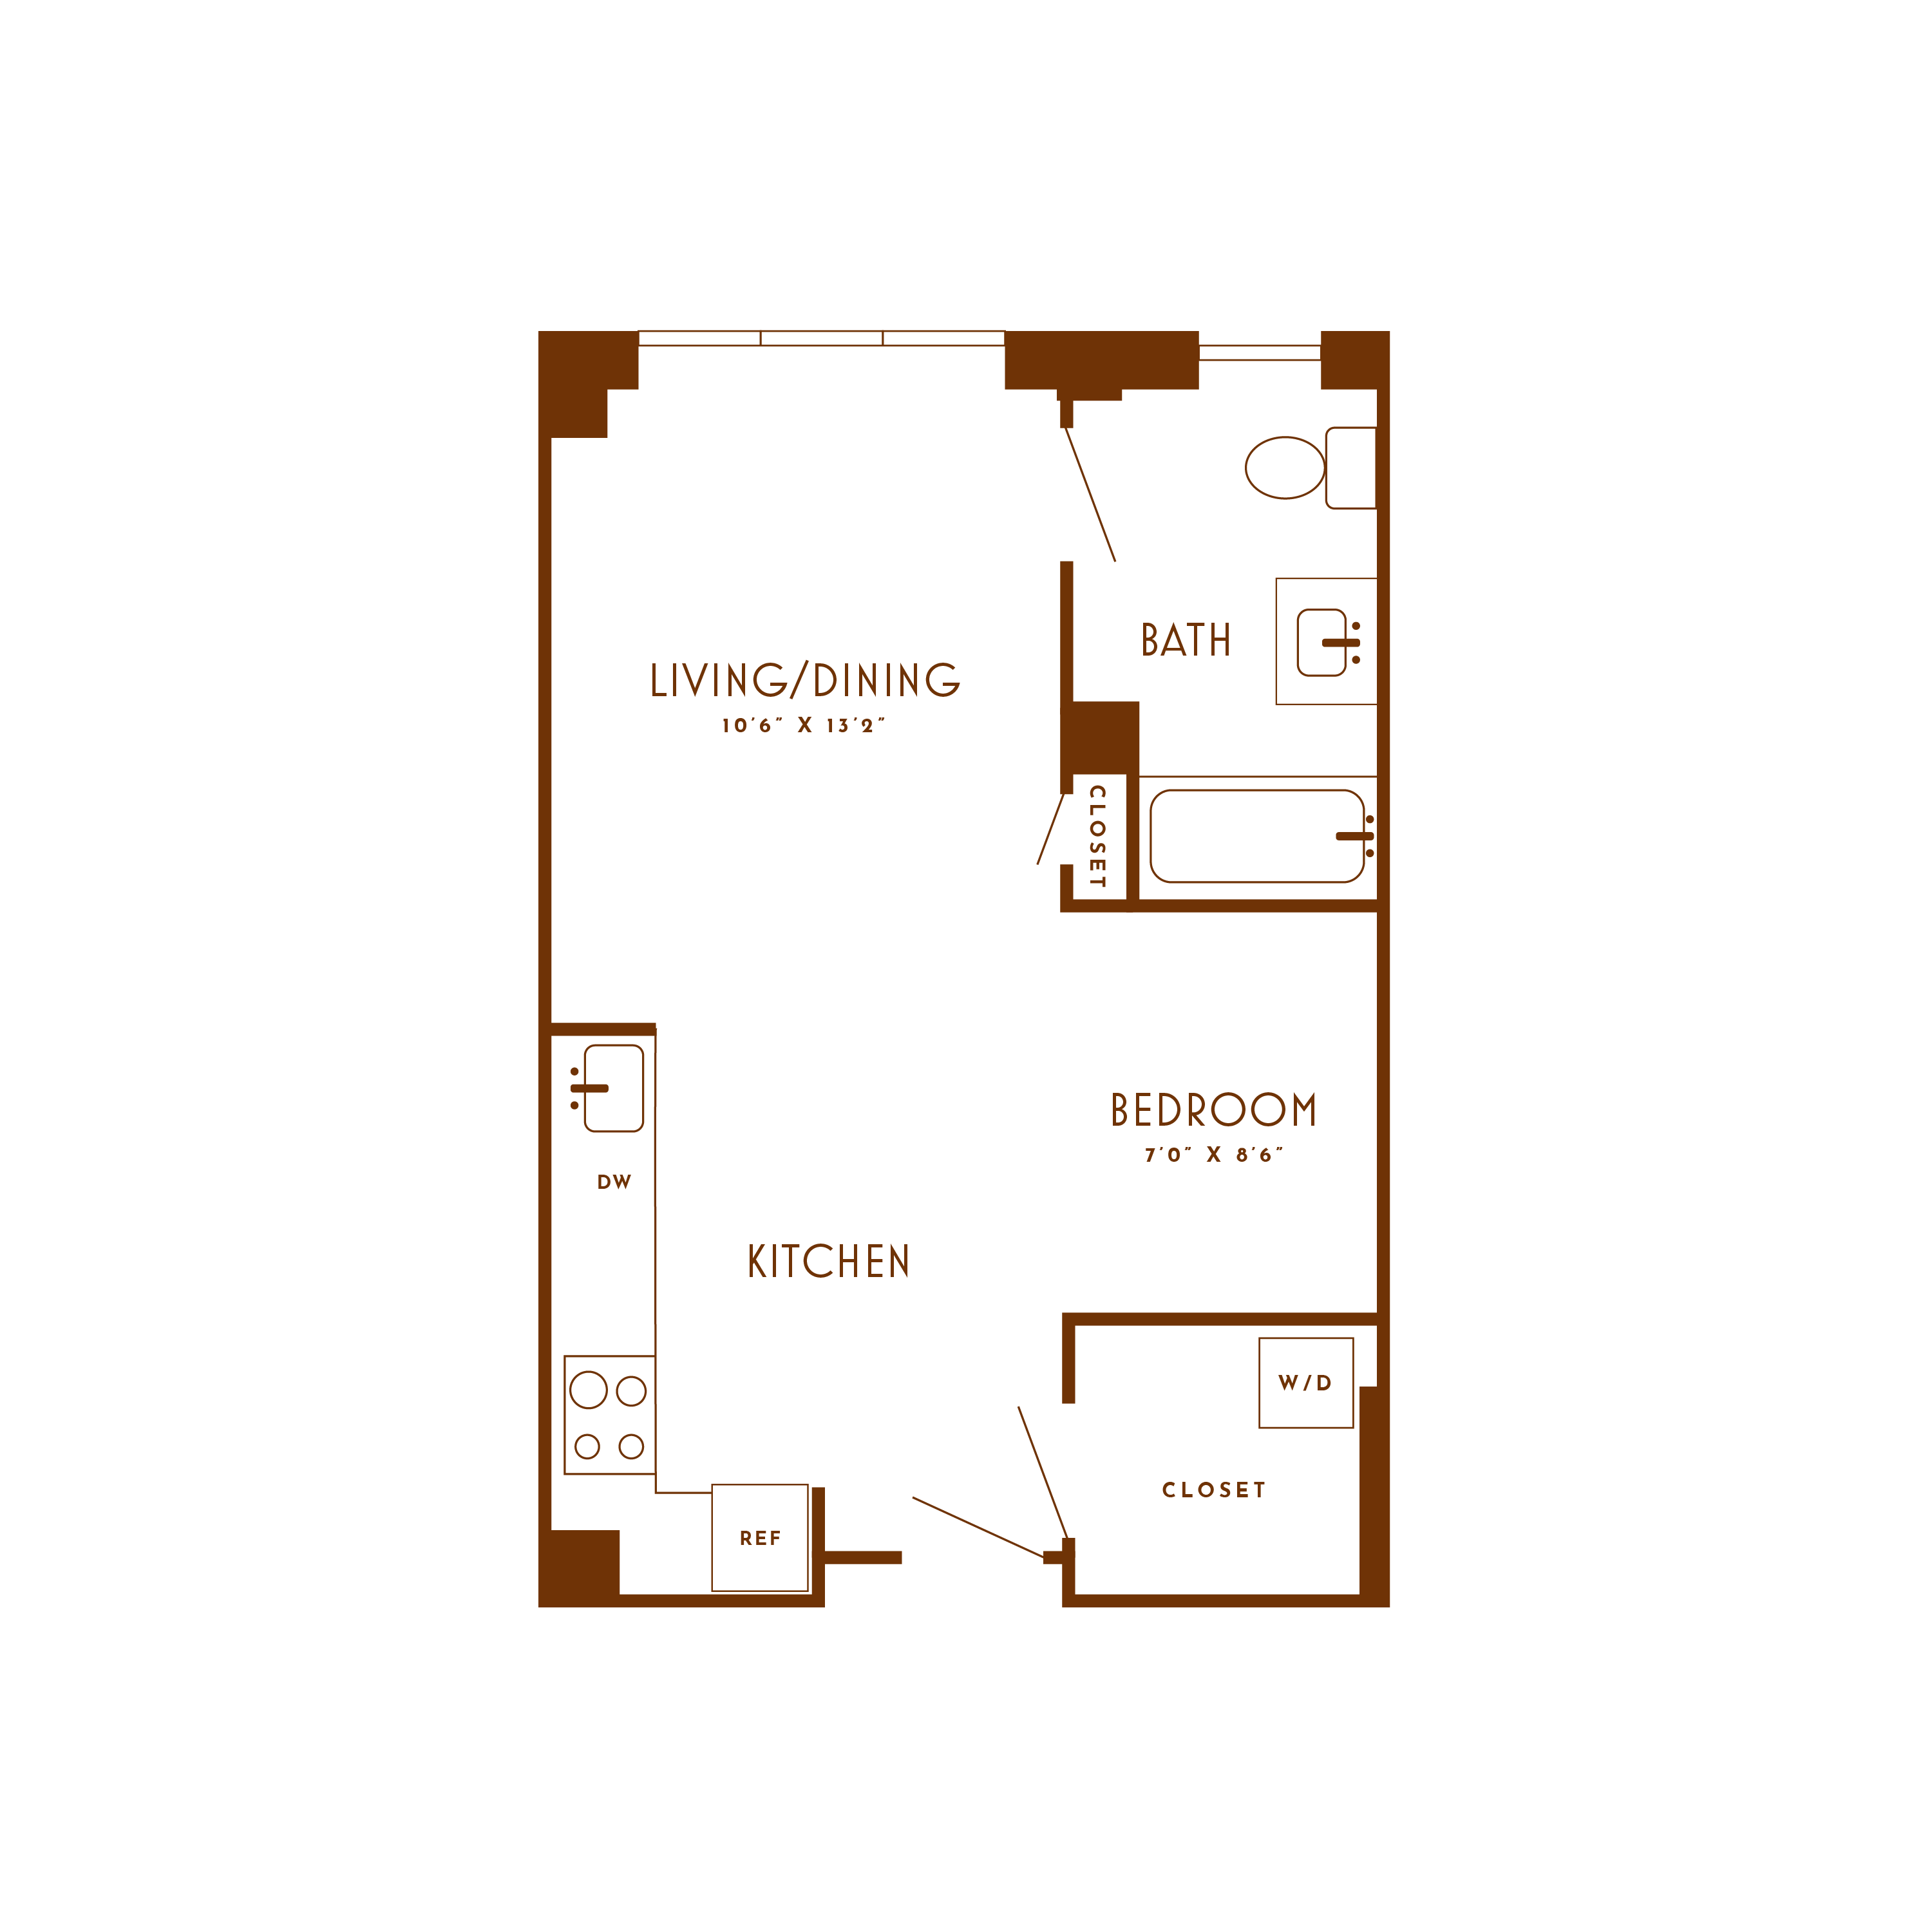 Floor plan image of unit 613